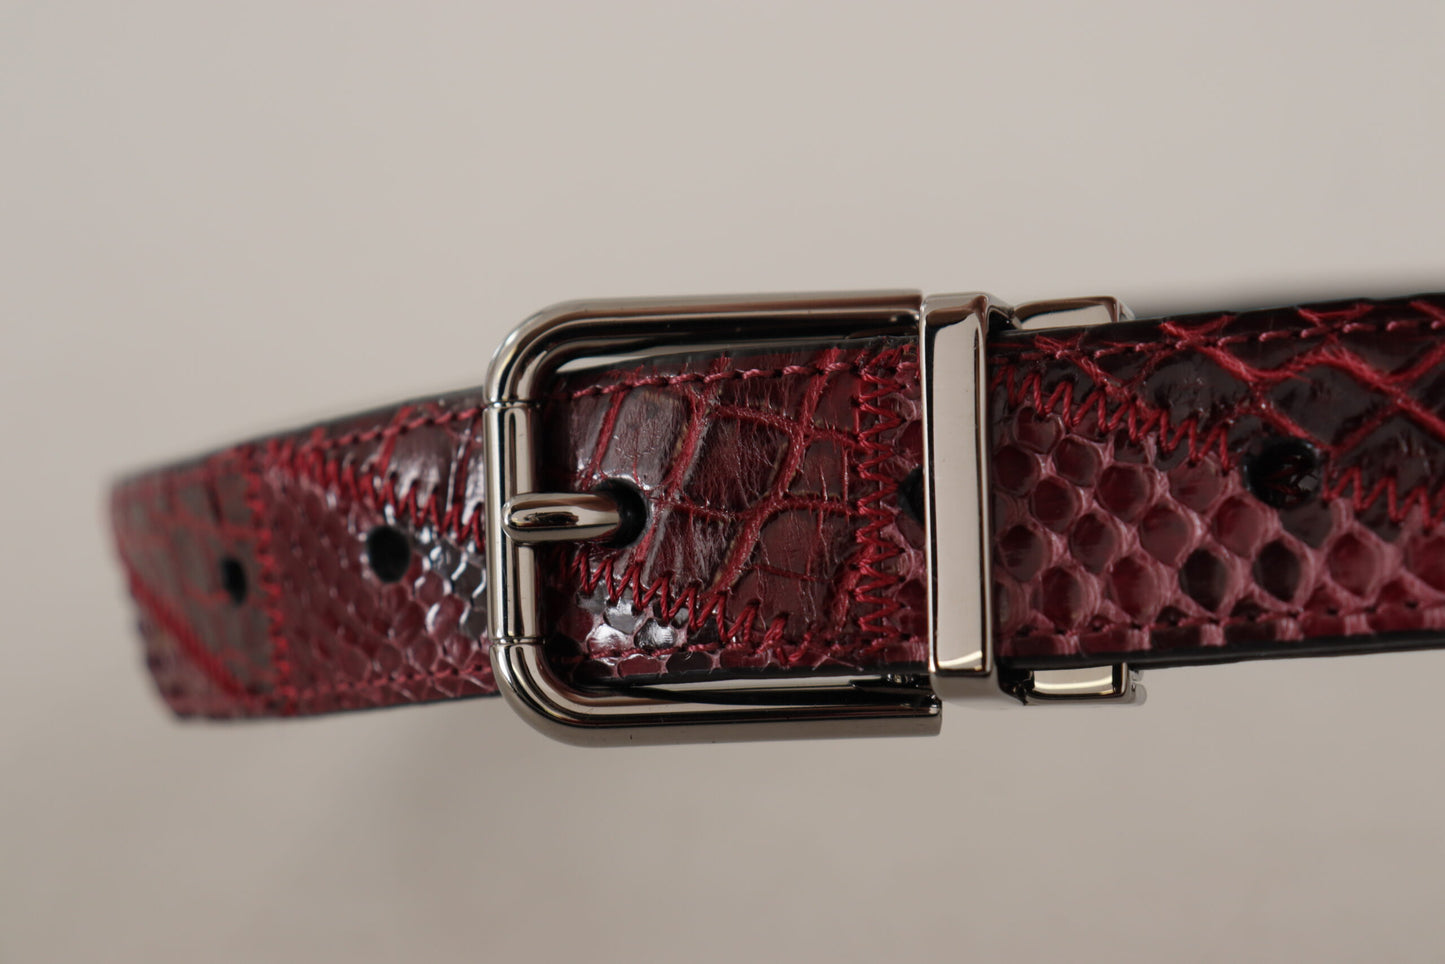 Elegant Red Exotic Leather Belt